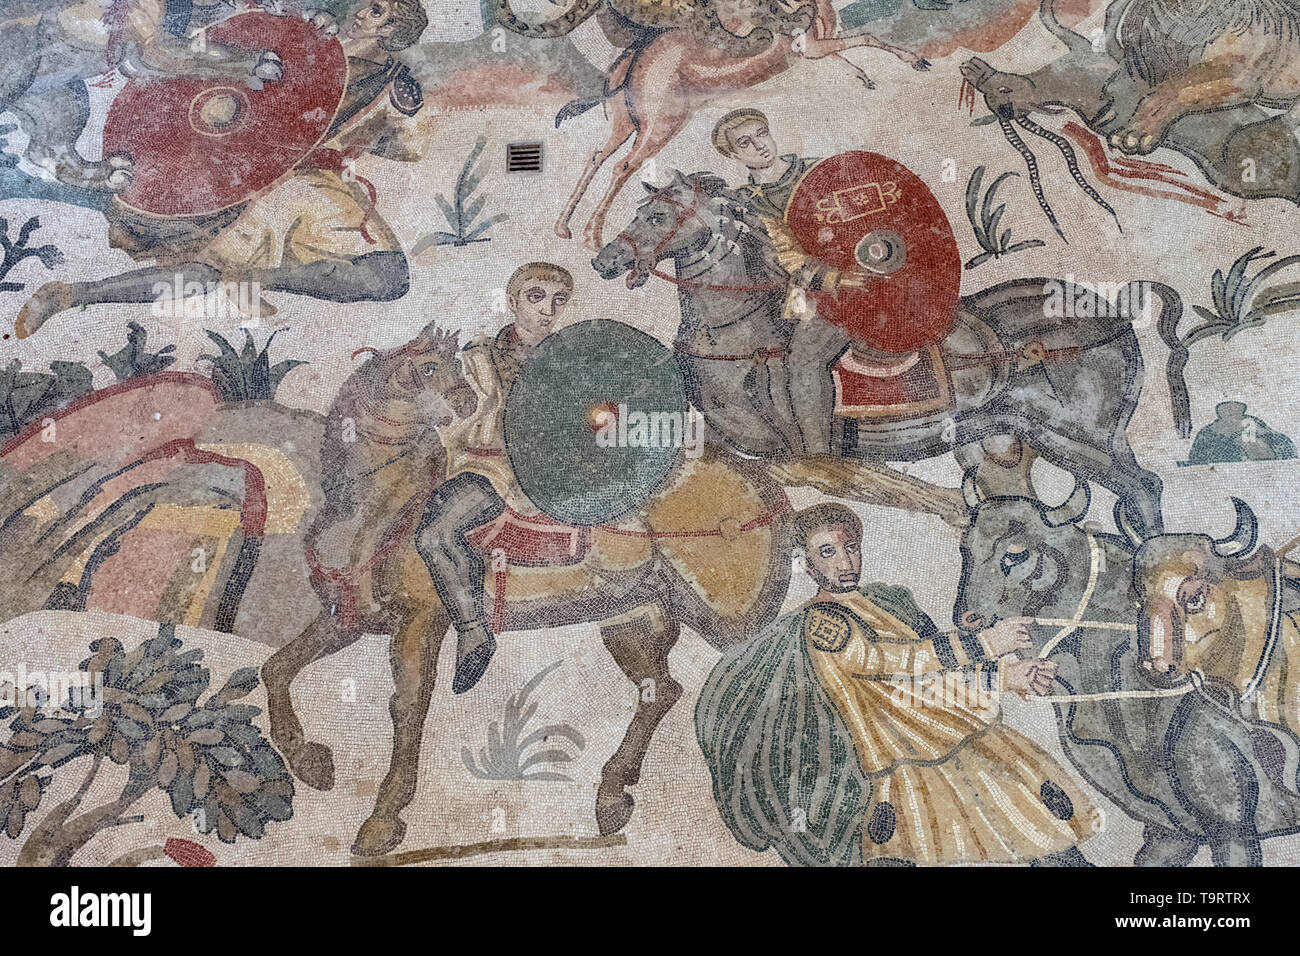 Great Hunt mosaic-capture and transportation of animals Roman mosaic in the Villa Romana del Casale, Piazza Armerina, Sicily, Italy. Stock Photo